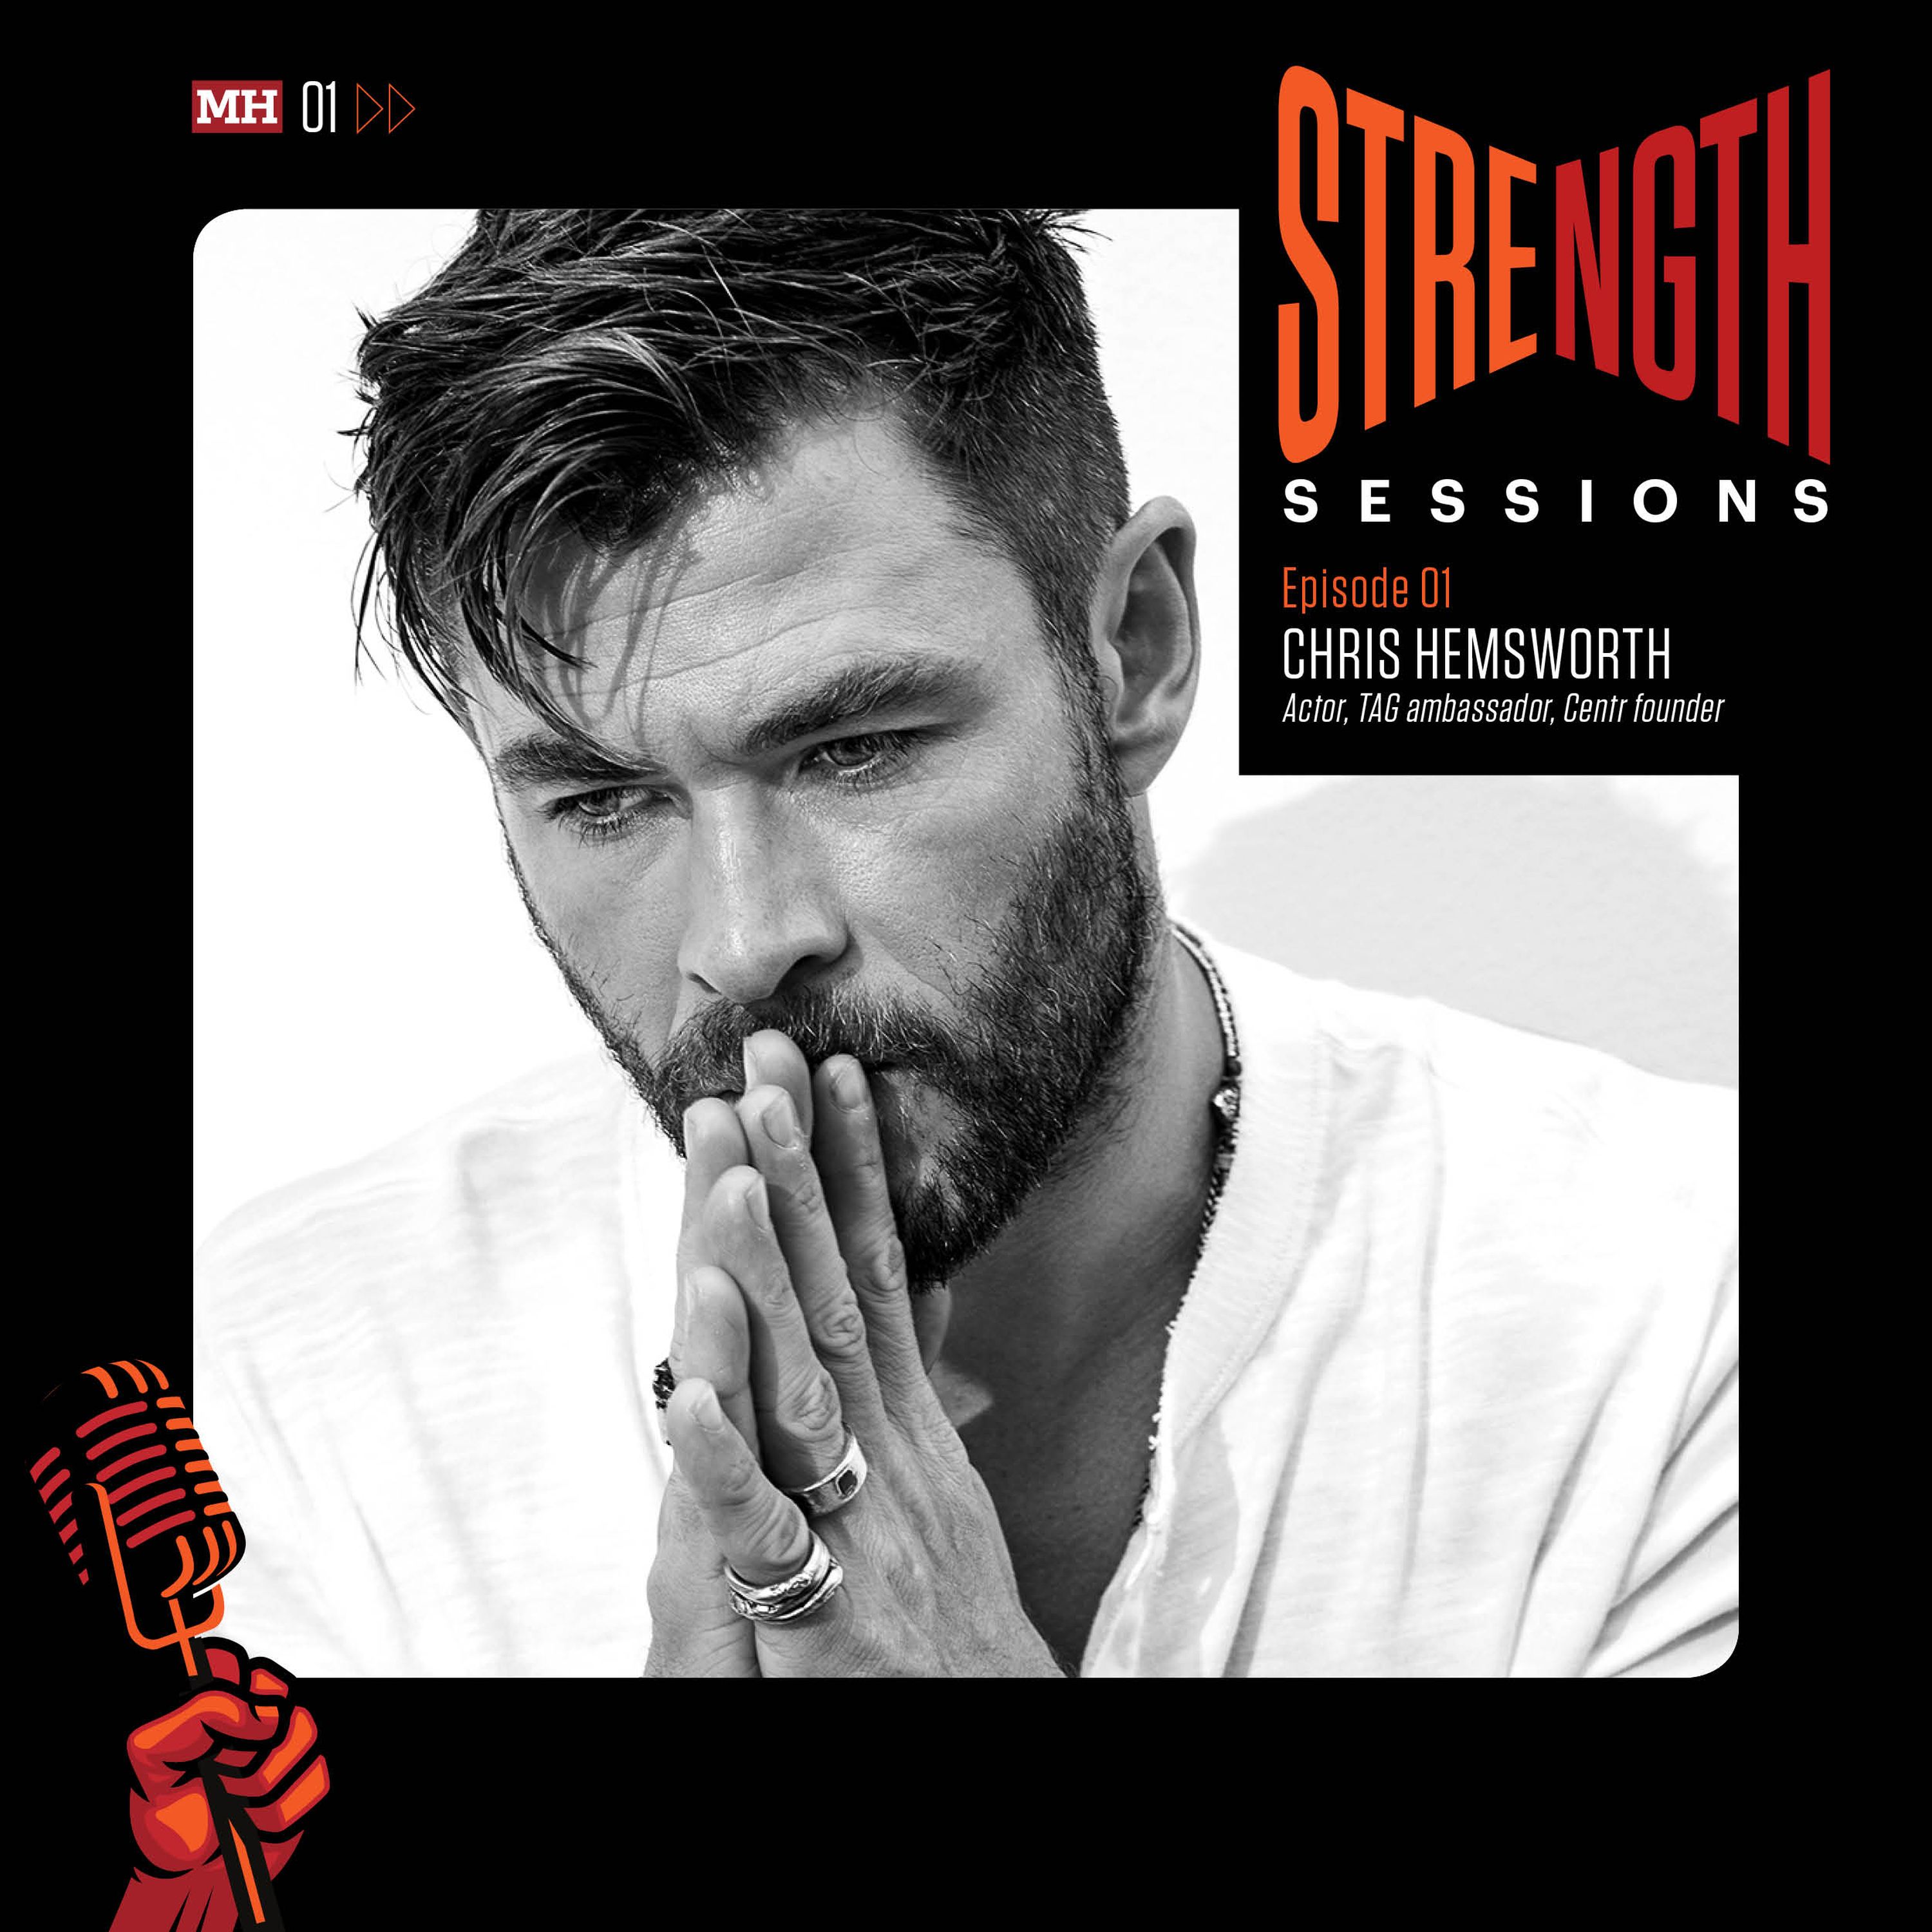 Chris Hemsworth: Finding strength in a post-Endgame world